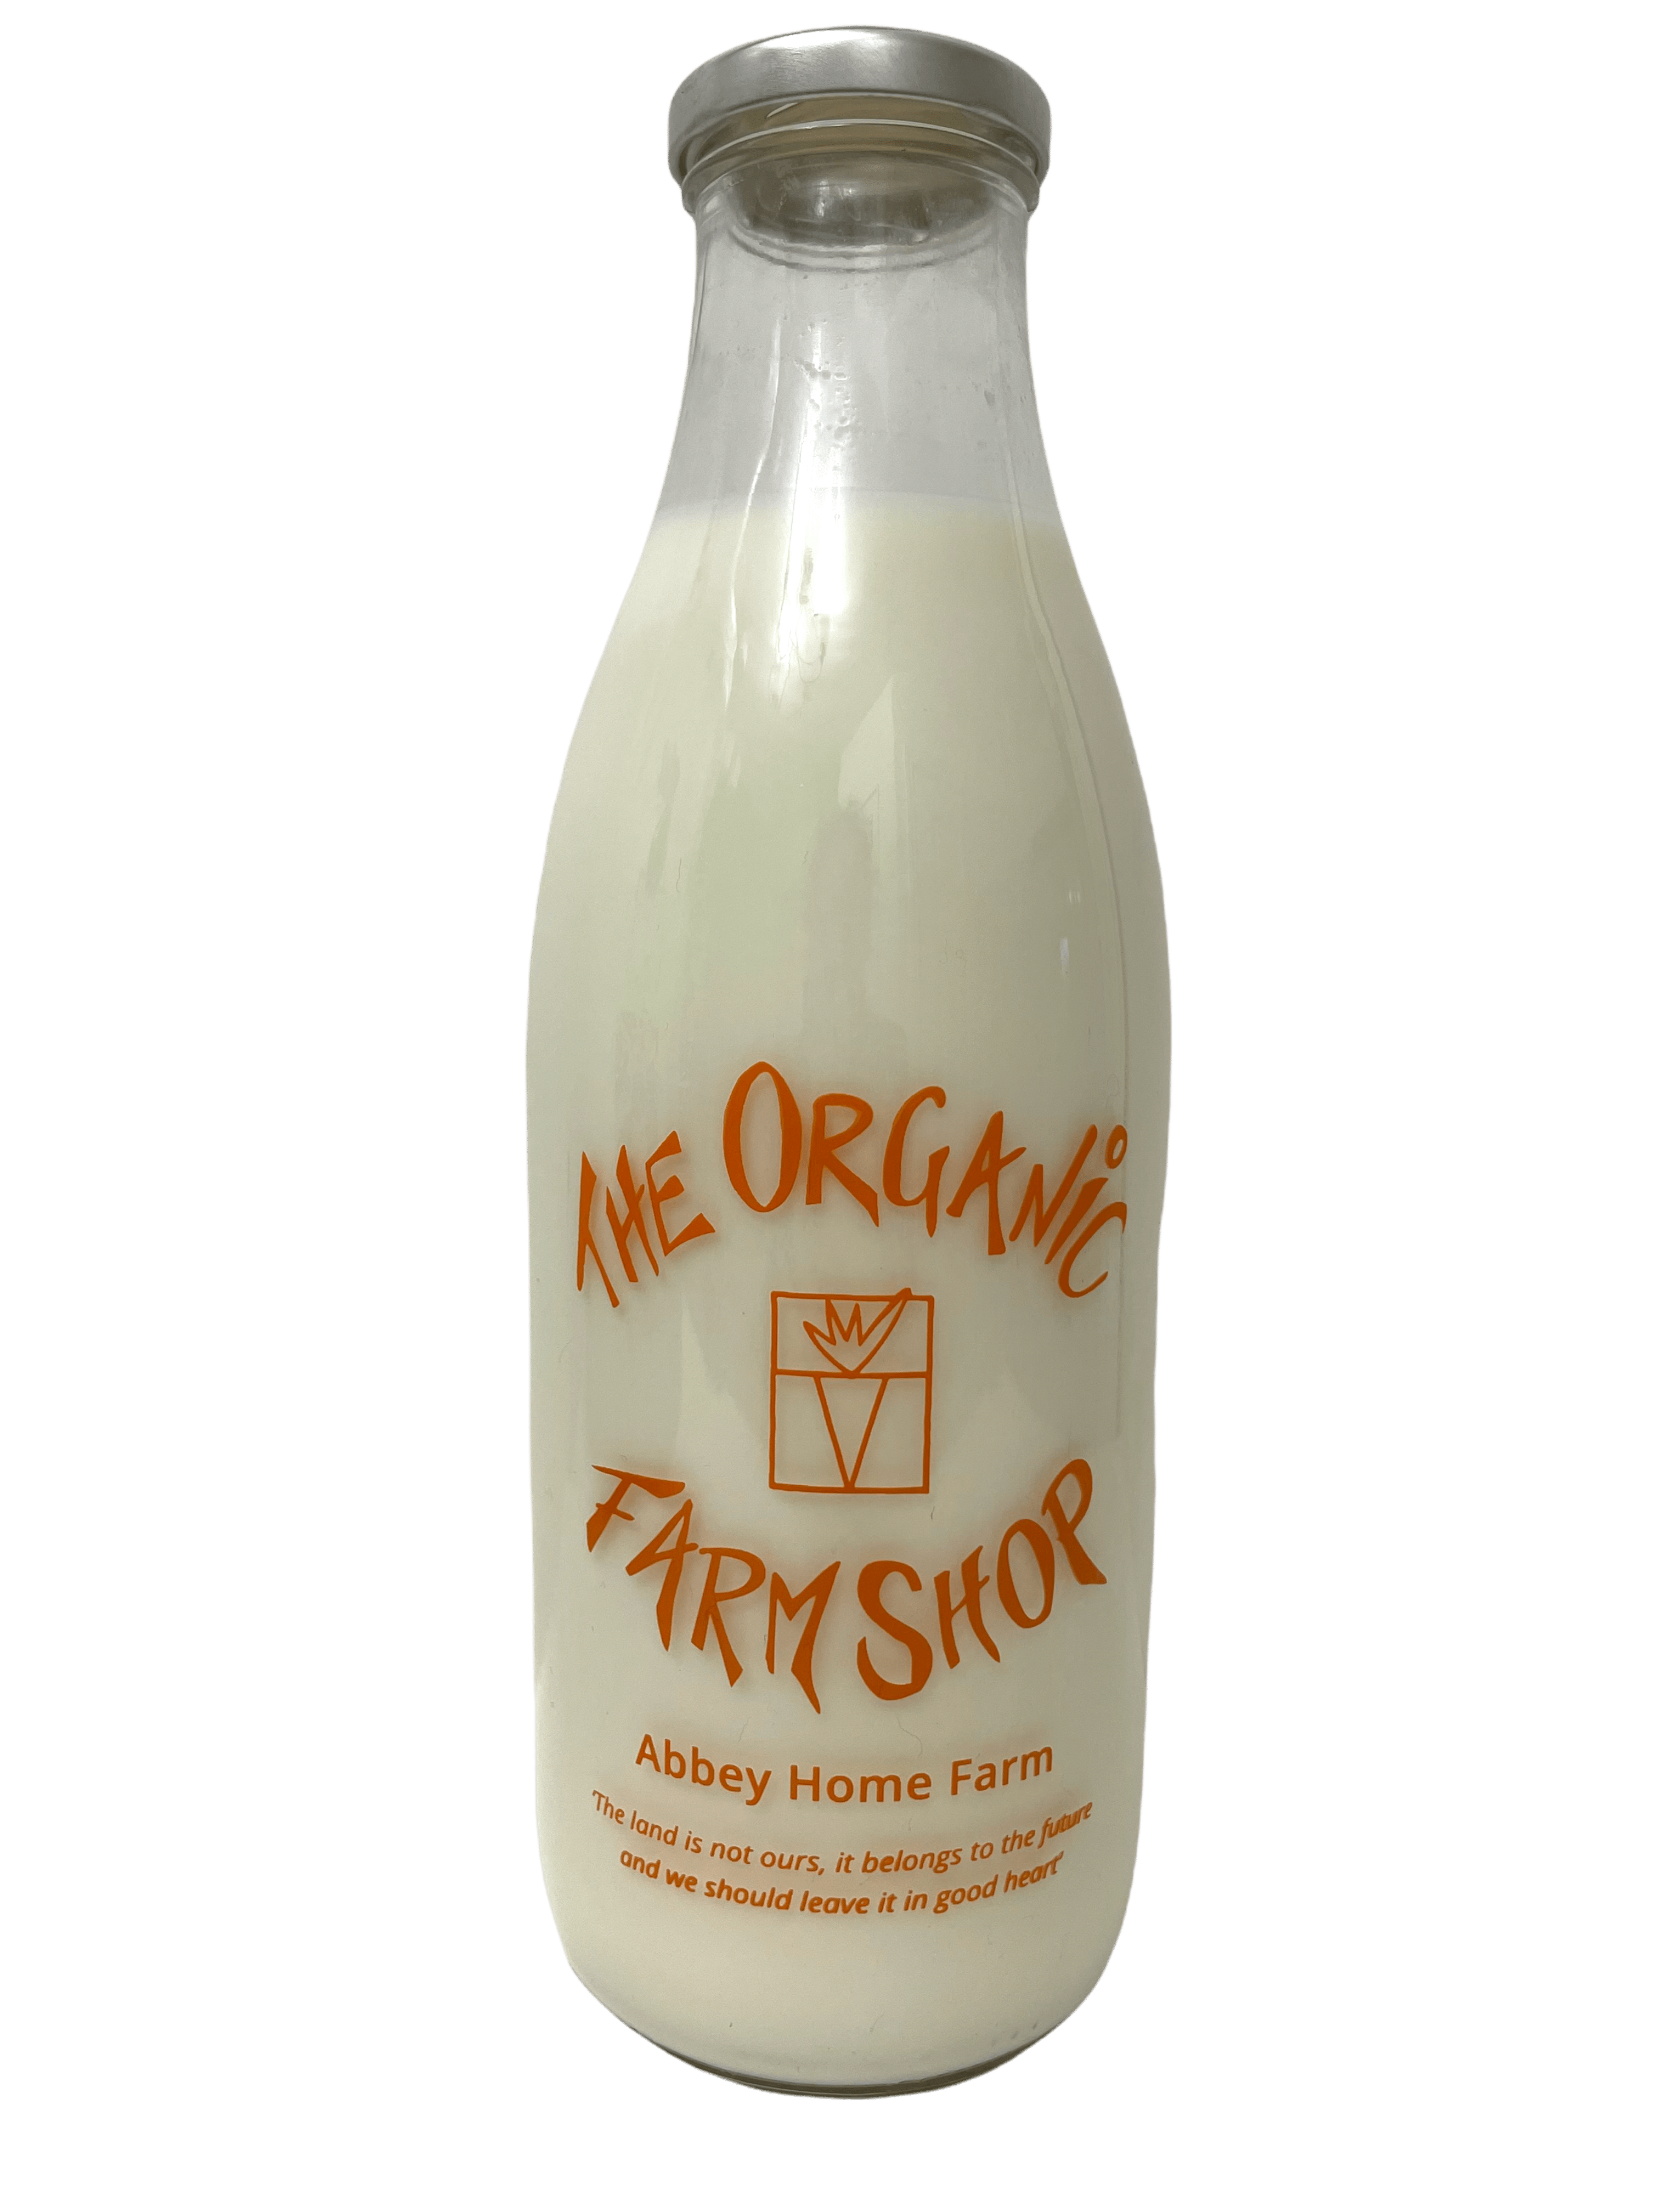 Organic Farm Shop - Kelis.info